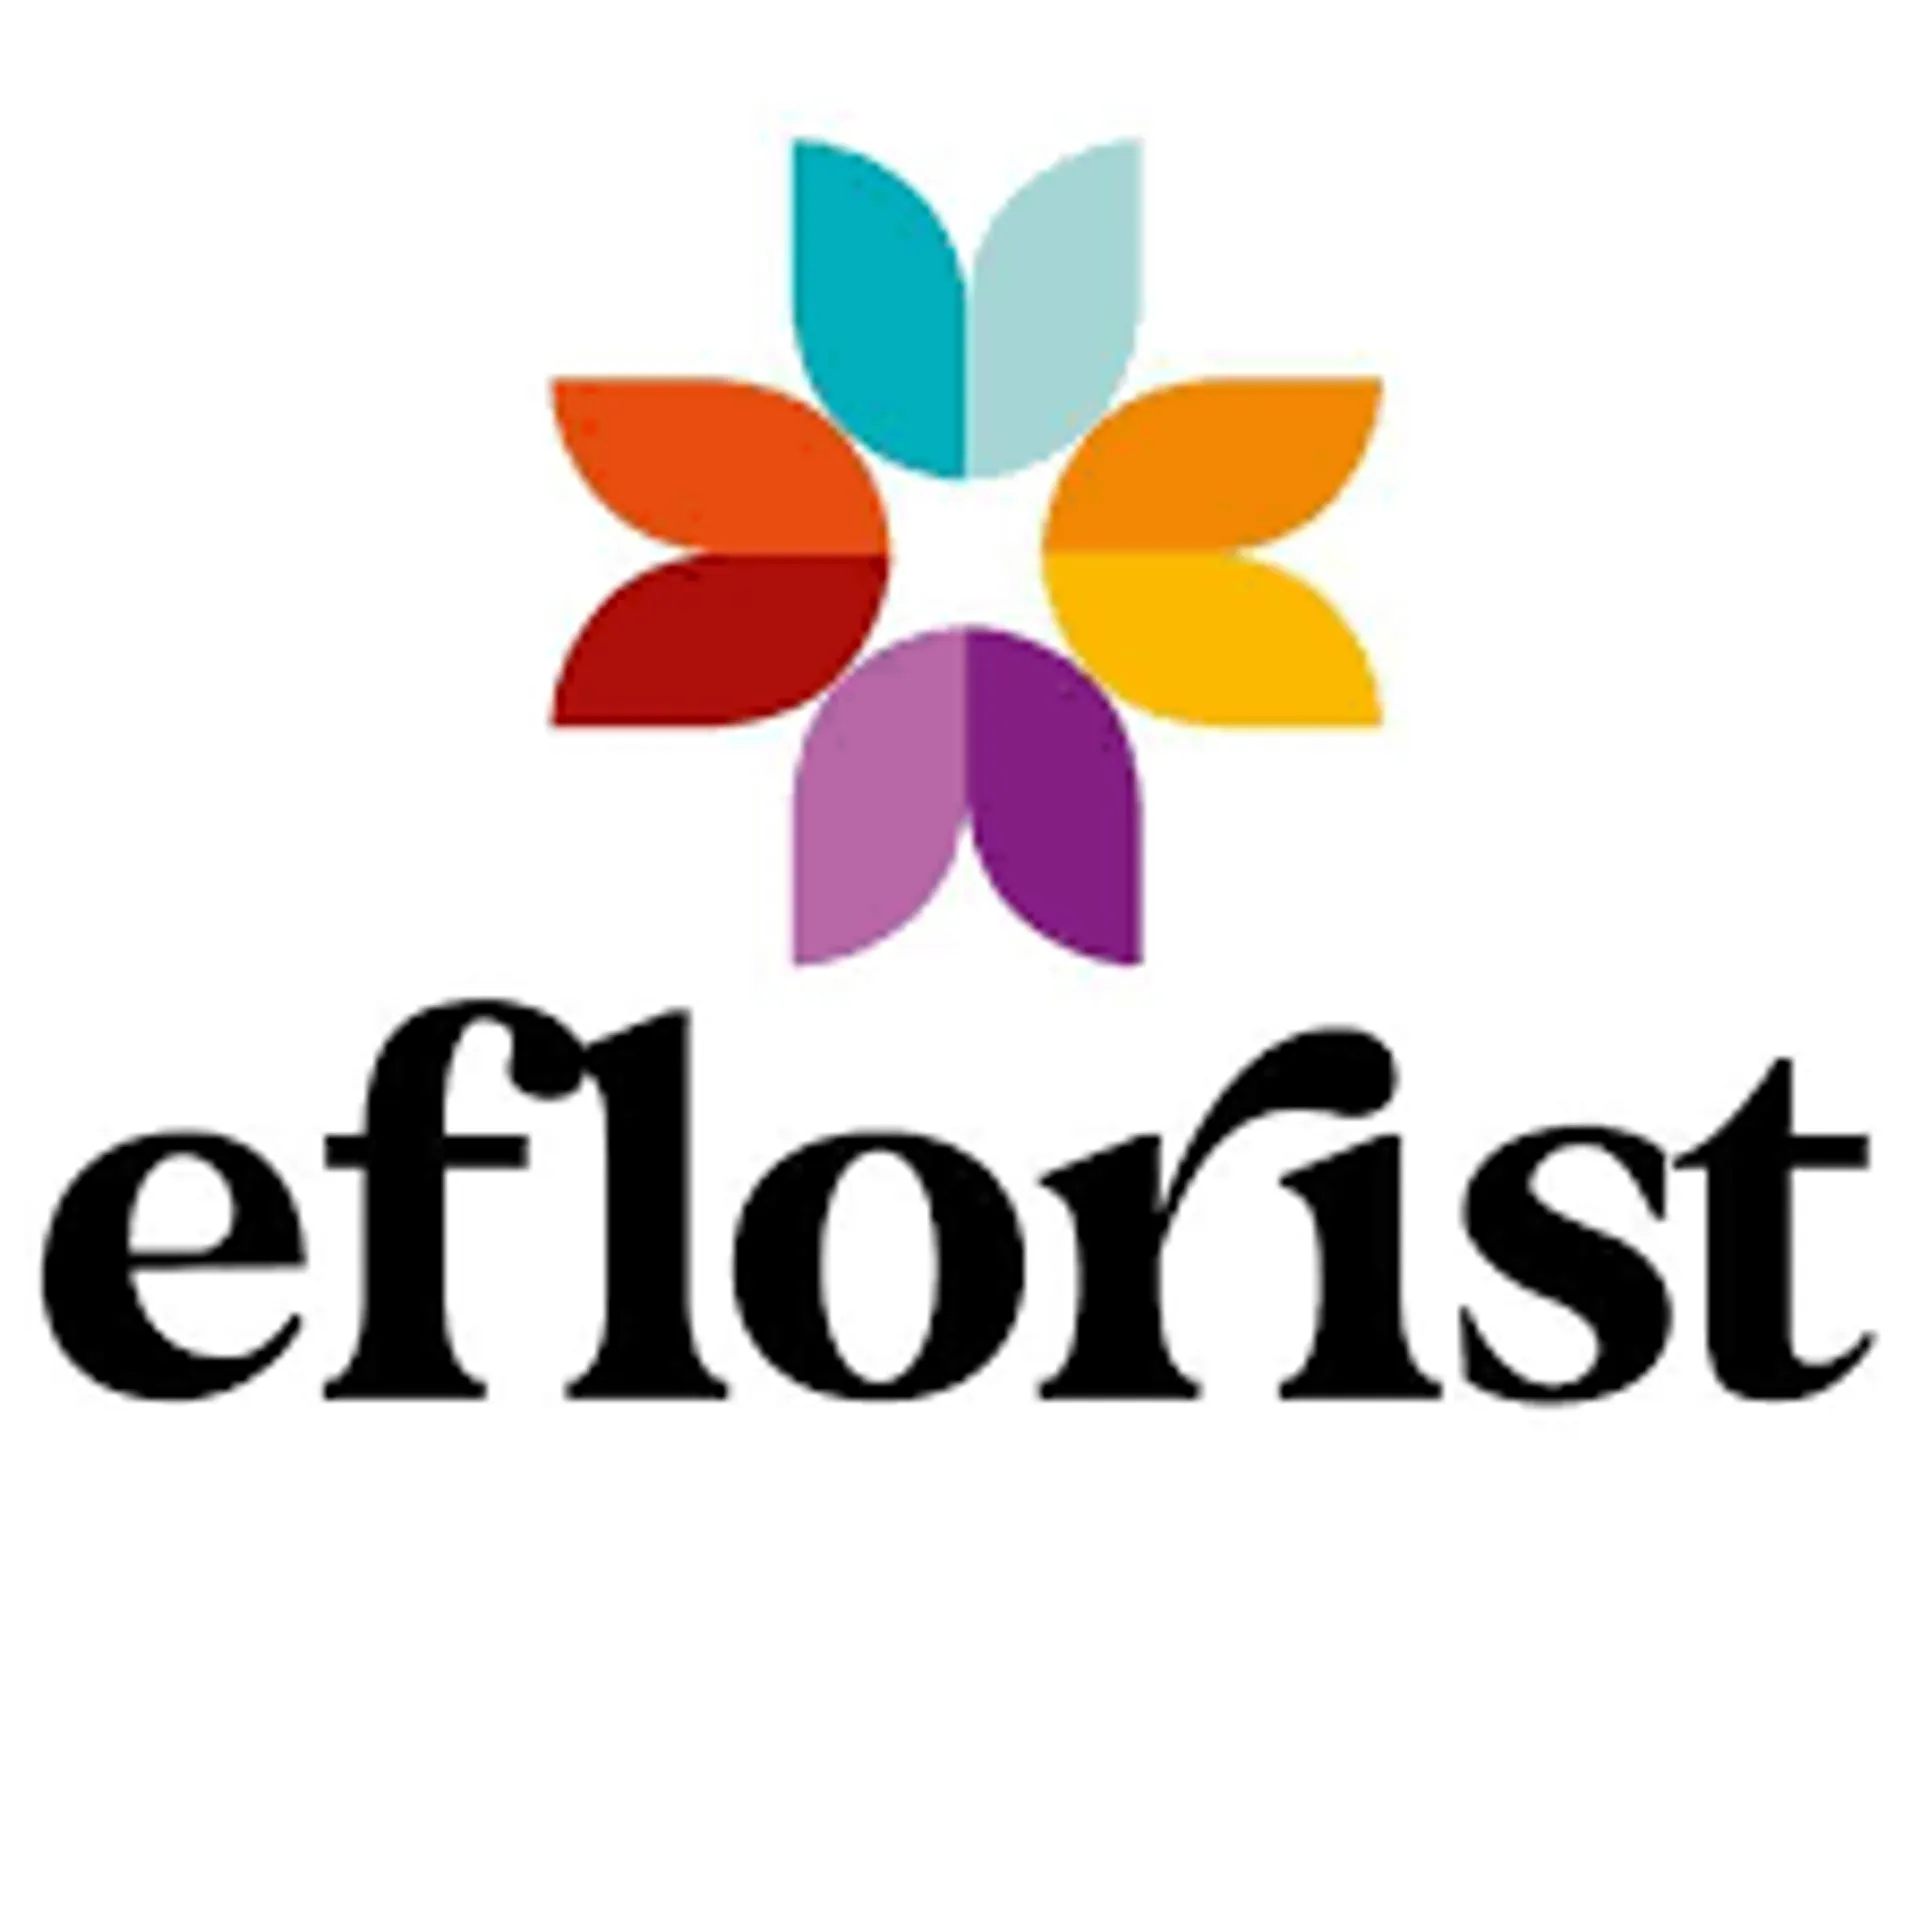 EFLORIST logo